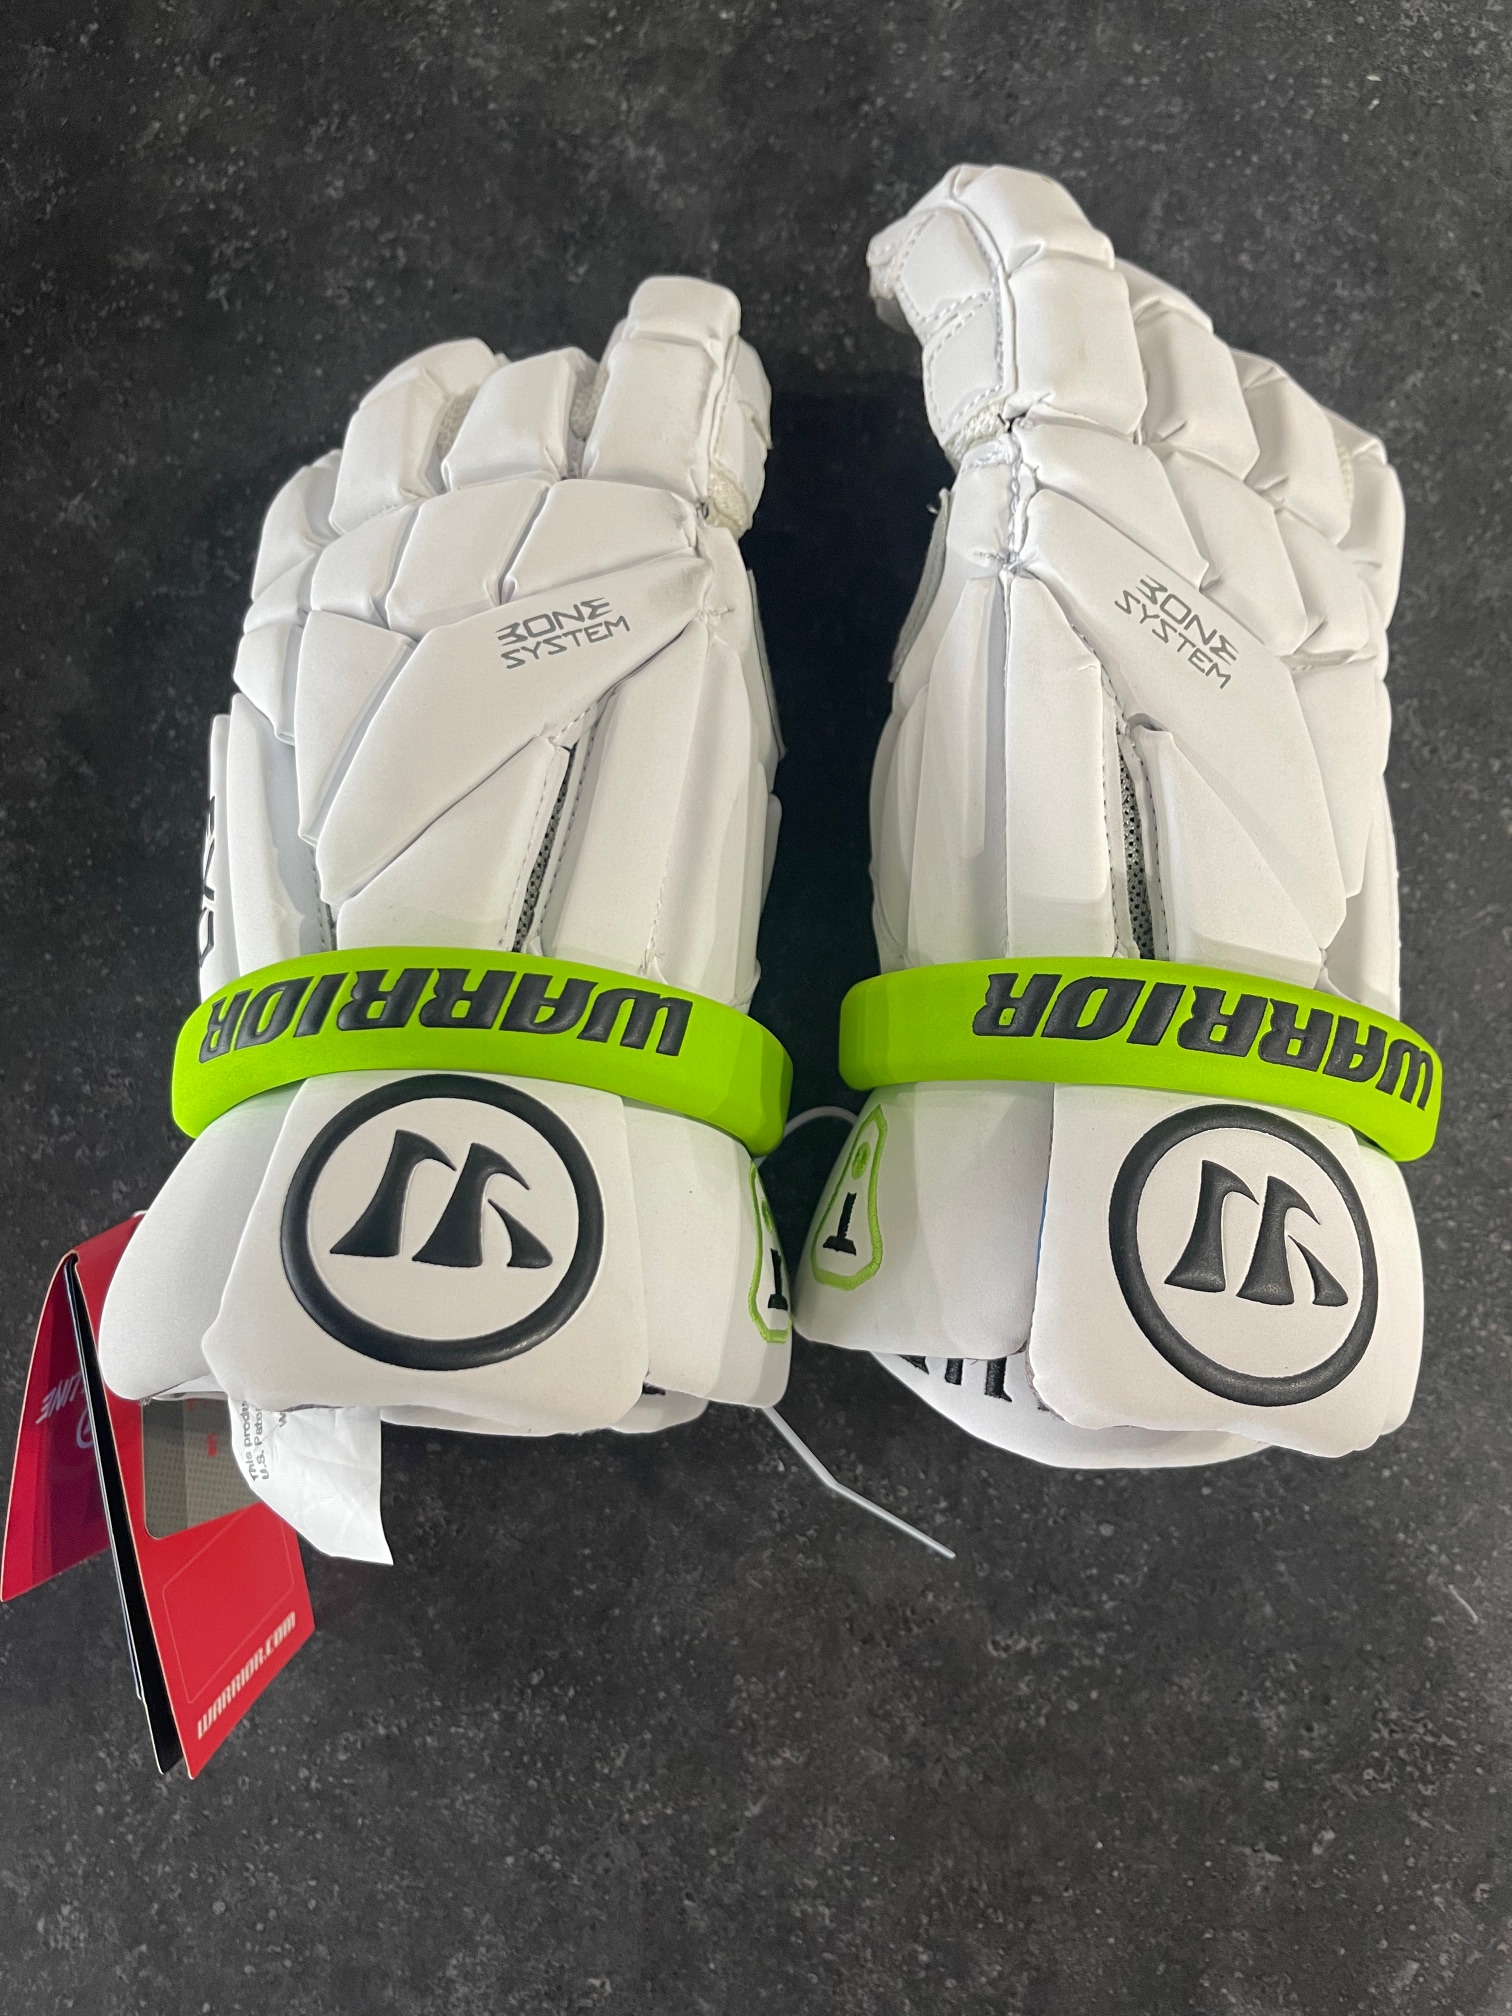 New Custom True Lacrosse Player's Warrior Evo Lacrosse Gloves 12"